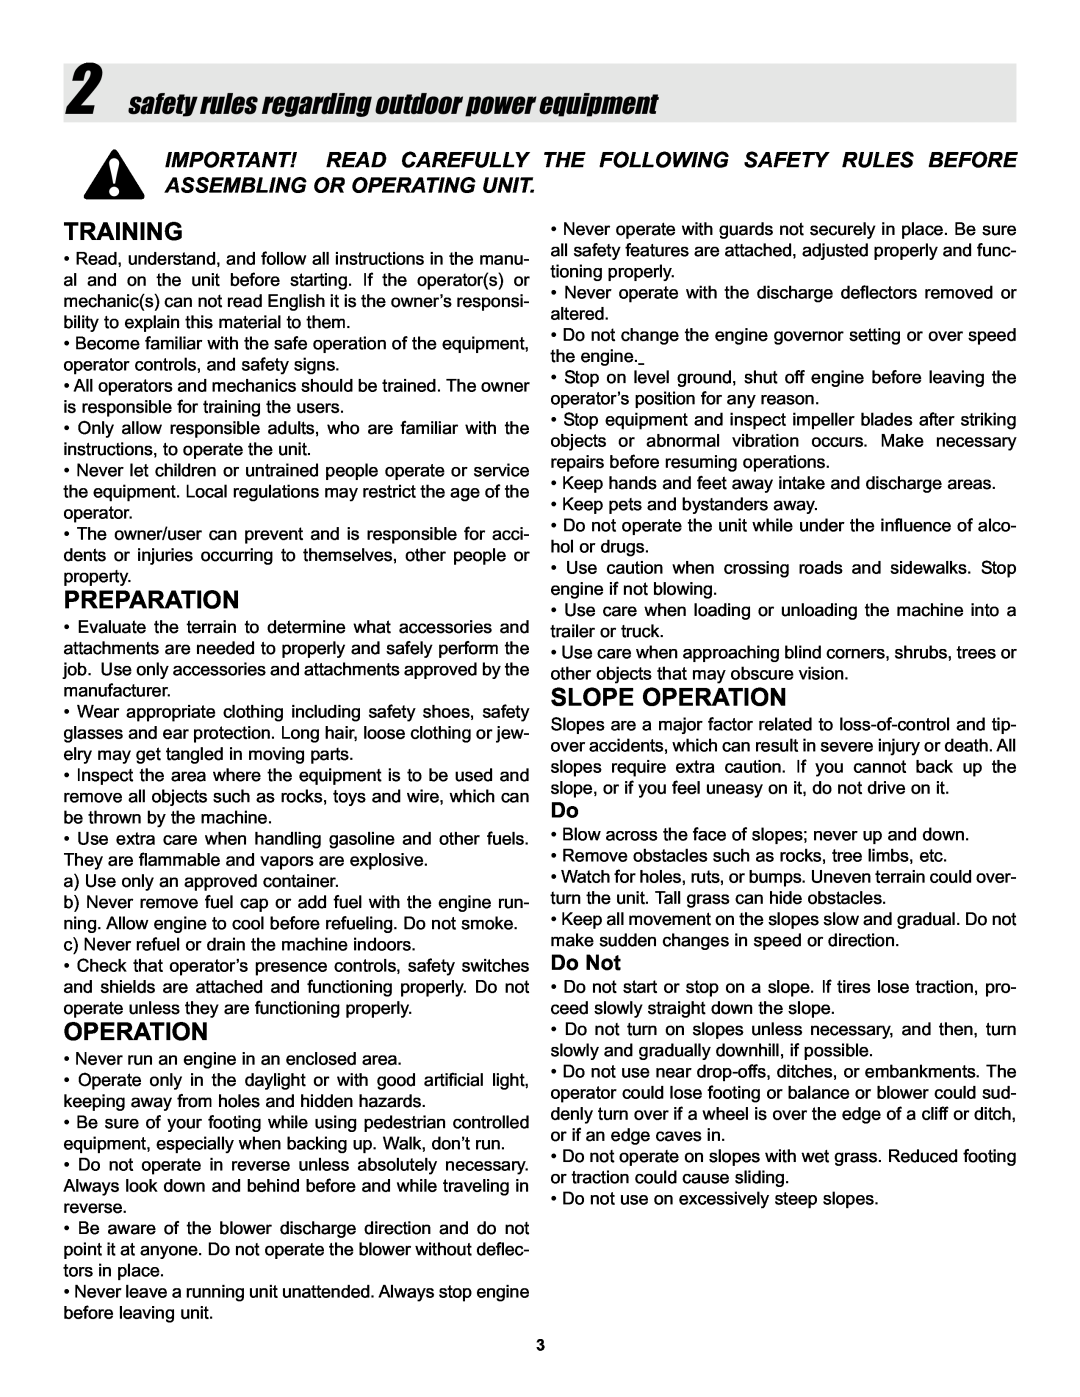 Snapper ELBX10152BV safety rules regarding outdoor power equipment, Training, Preparation, Slope Operation, Do Not 